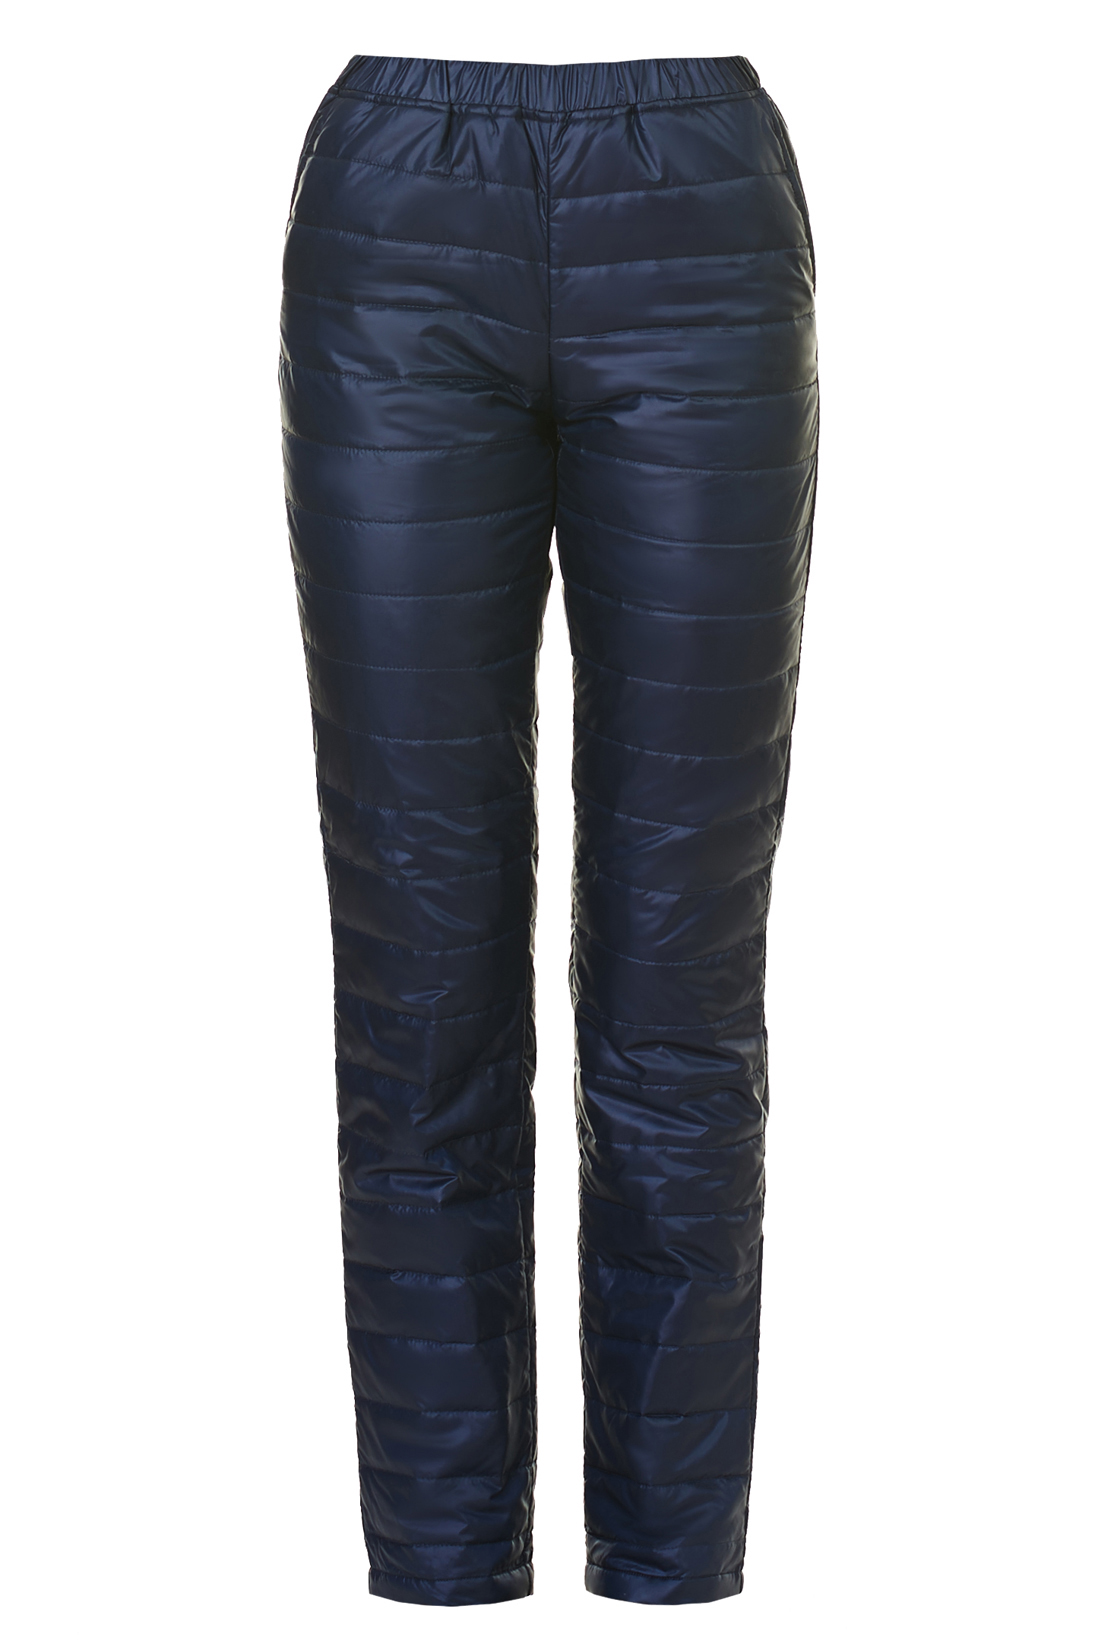 Утеплённые брюки без застёжки (арт. baon B297503), размер XL, цвет синий Утеплённые брюки без застёжки (арт. baon B297503) - фото 3